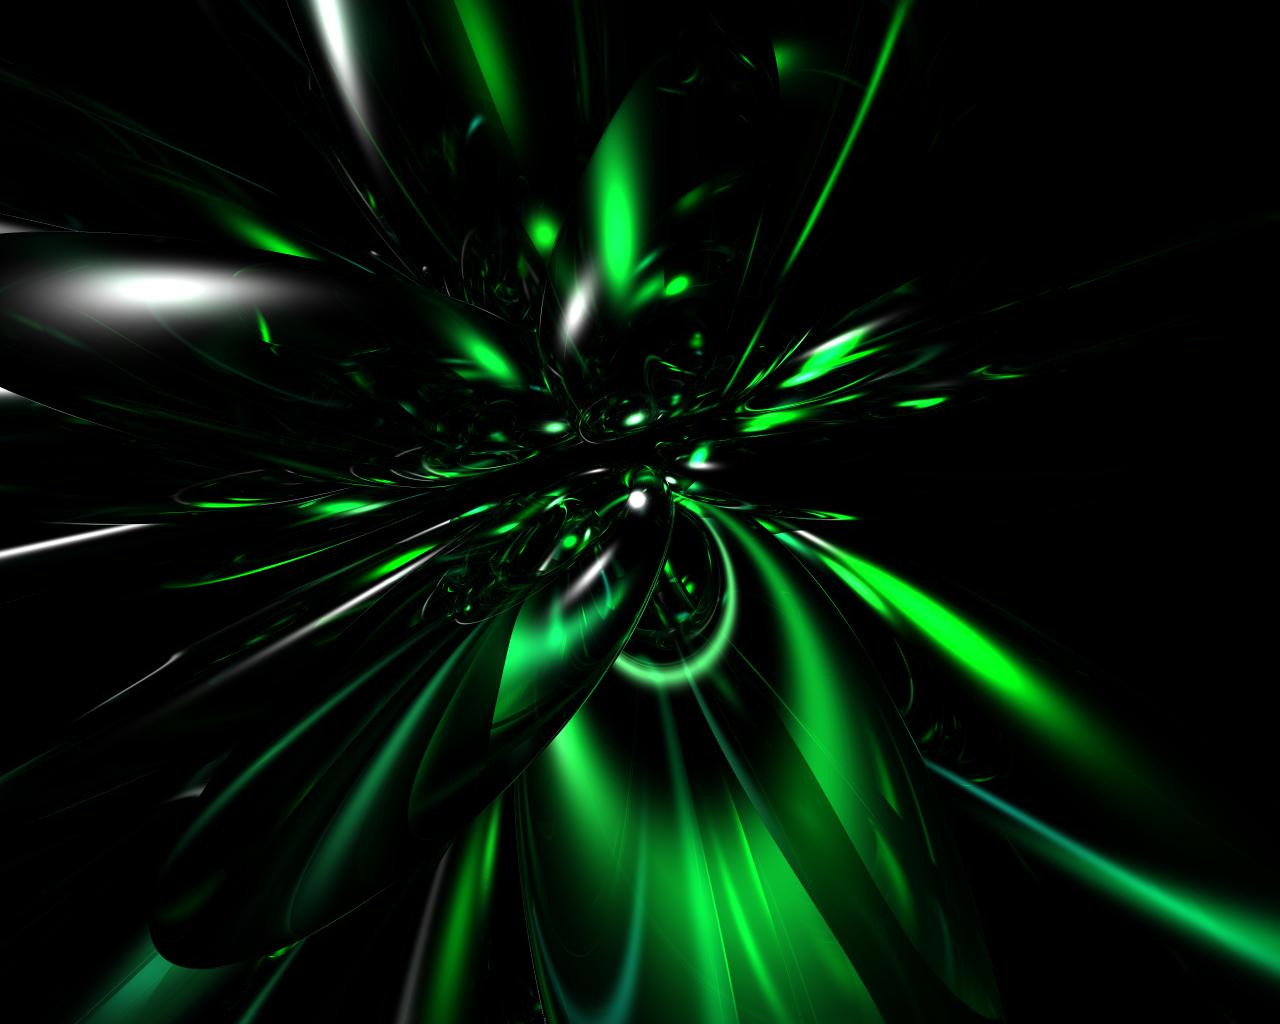 Black and Green by BaTTleSaGe on deviantART